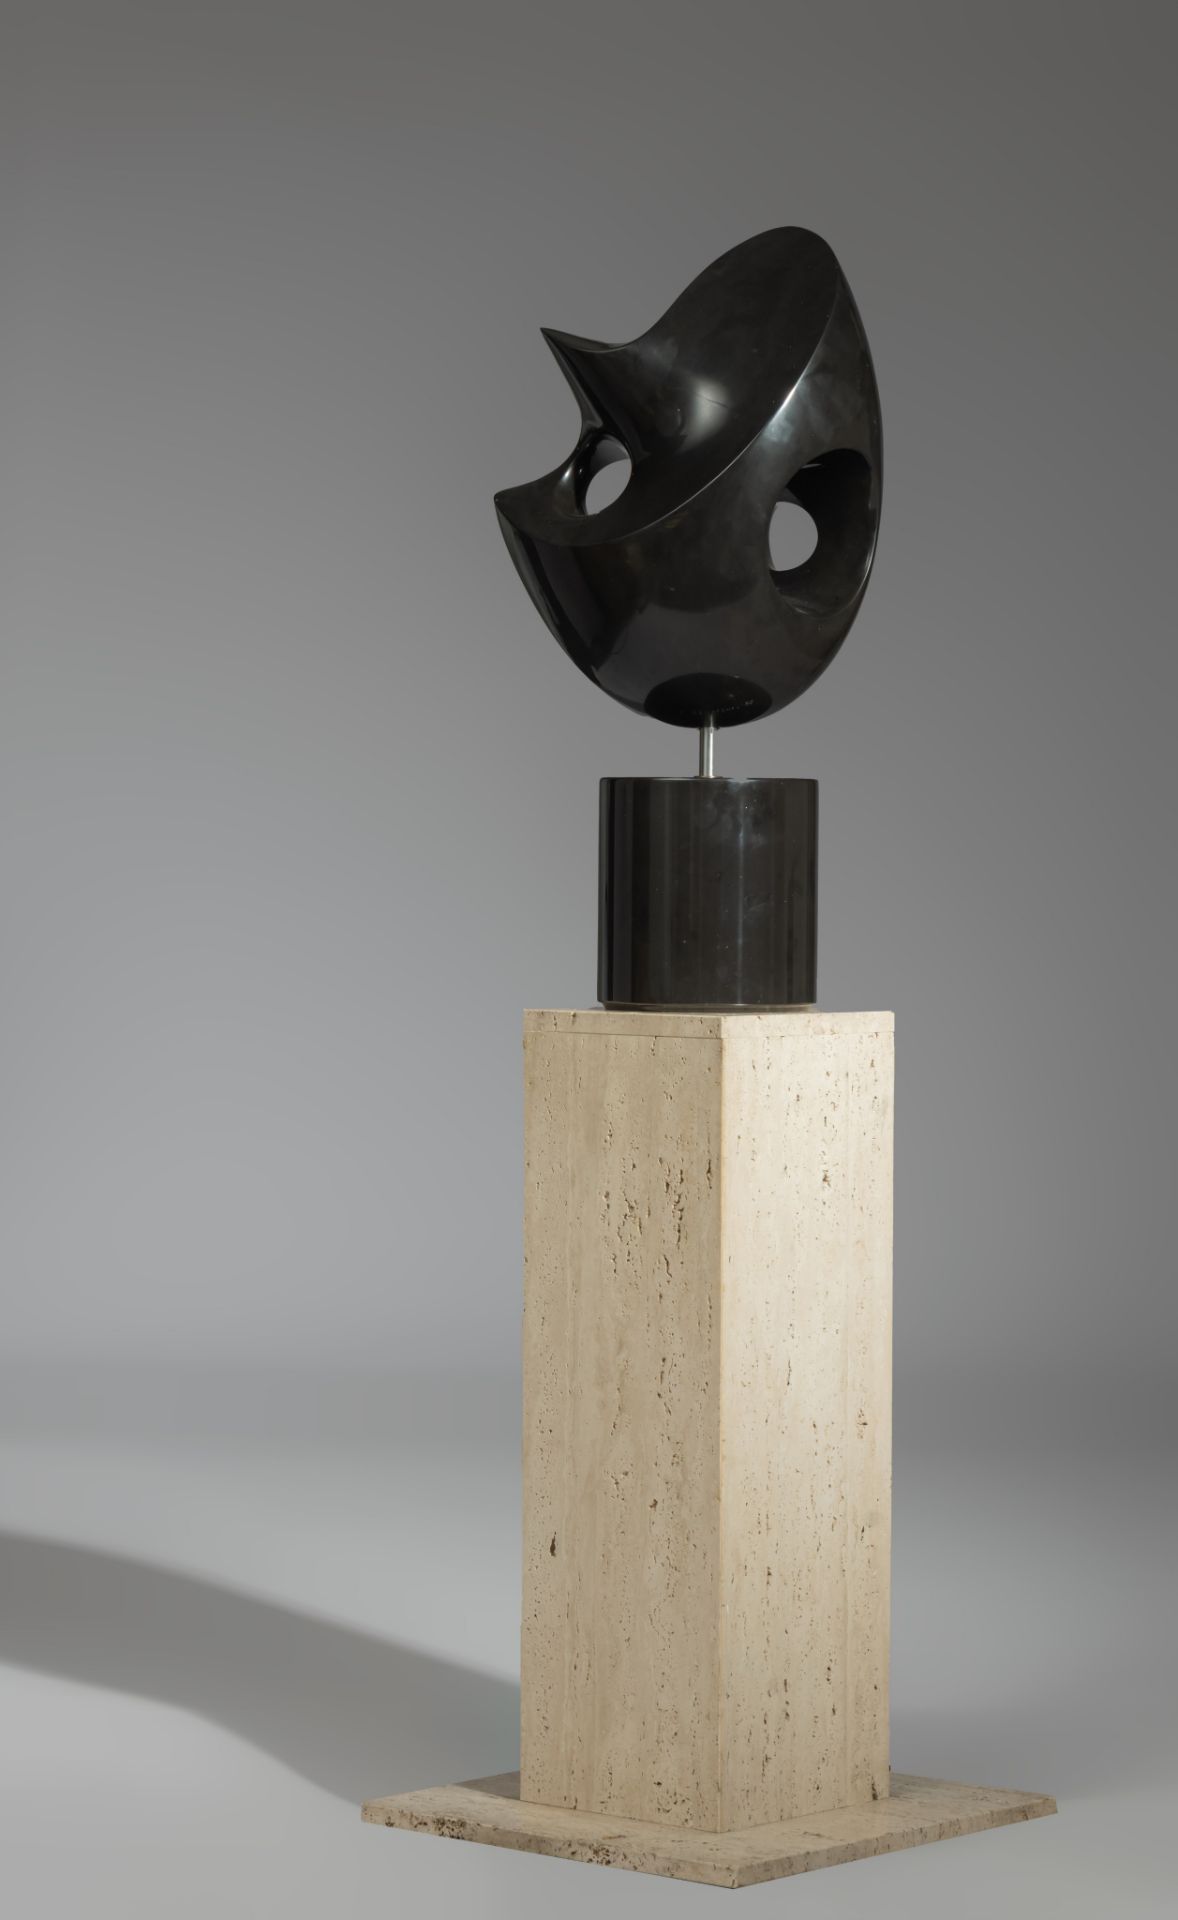 Jeanine Behaeghel (1940-1993), abstract sculpture, 1988, noir Belge marble on a travertine pedestal, - Image 11 of 18